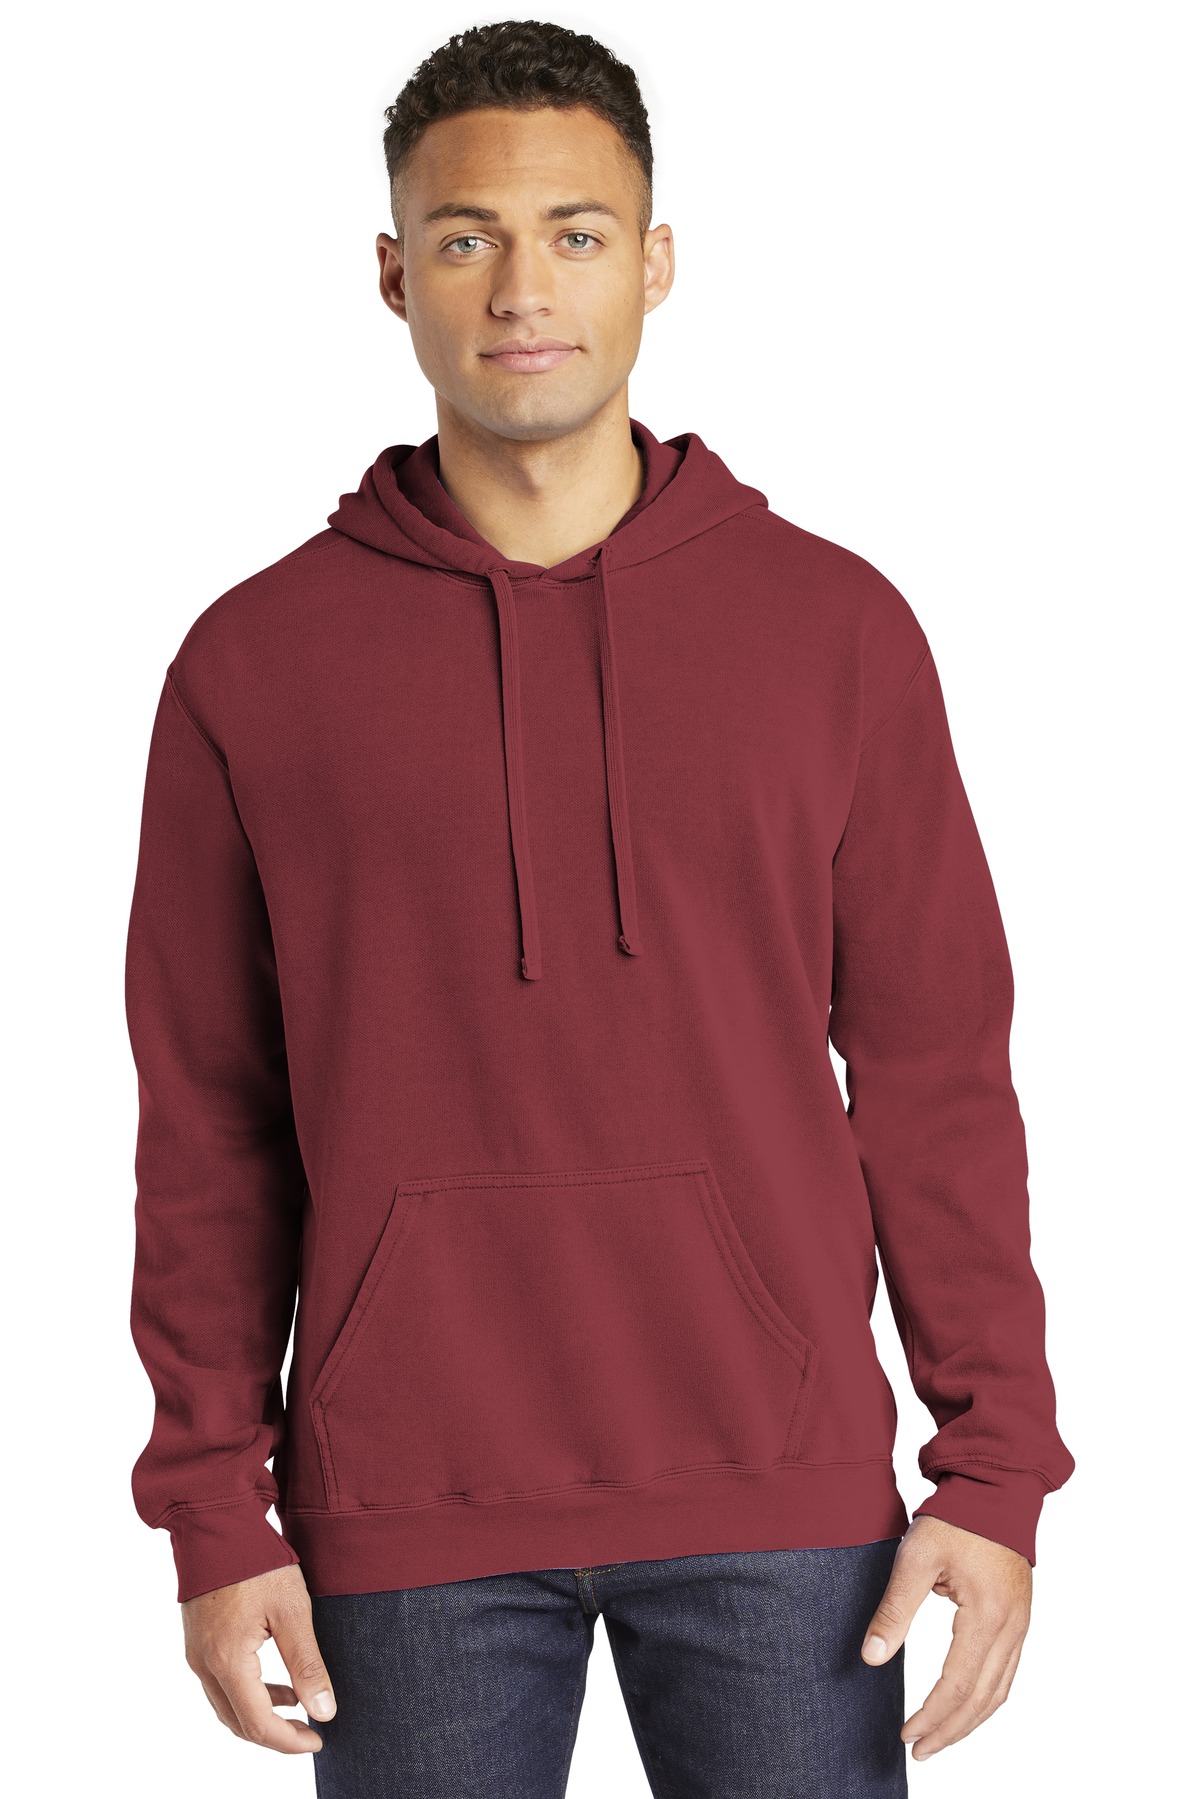 Comfort Colors 1567 - Garment-Dyed Hooded Sweatshirt